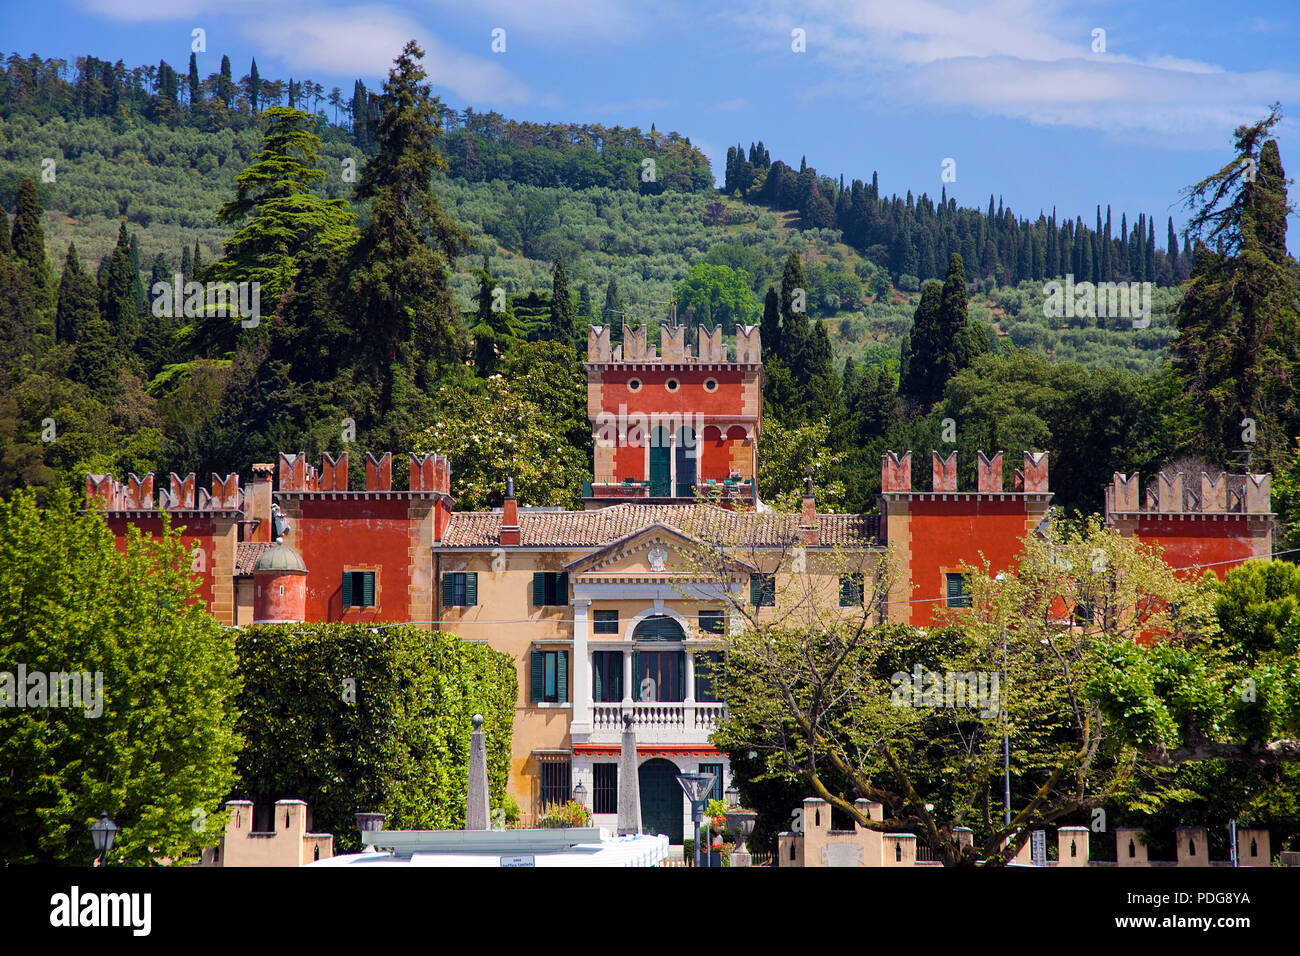 Villa Albertini, Palast des 16. Jahrhunderts, neo-klassischer Architektur, Garda, Provinz Verona, Gardasee, Italien Stockfoto